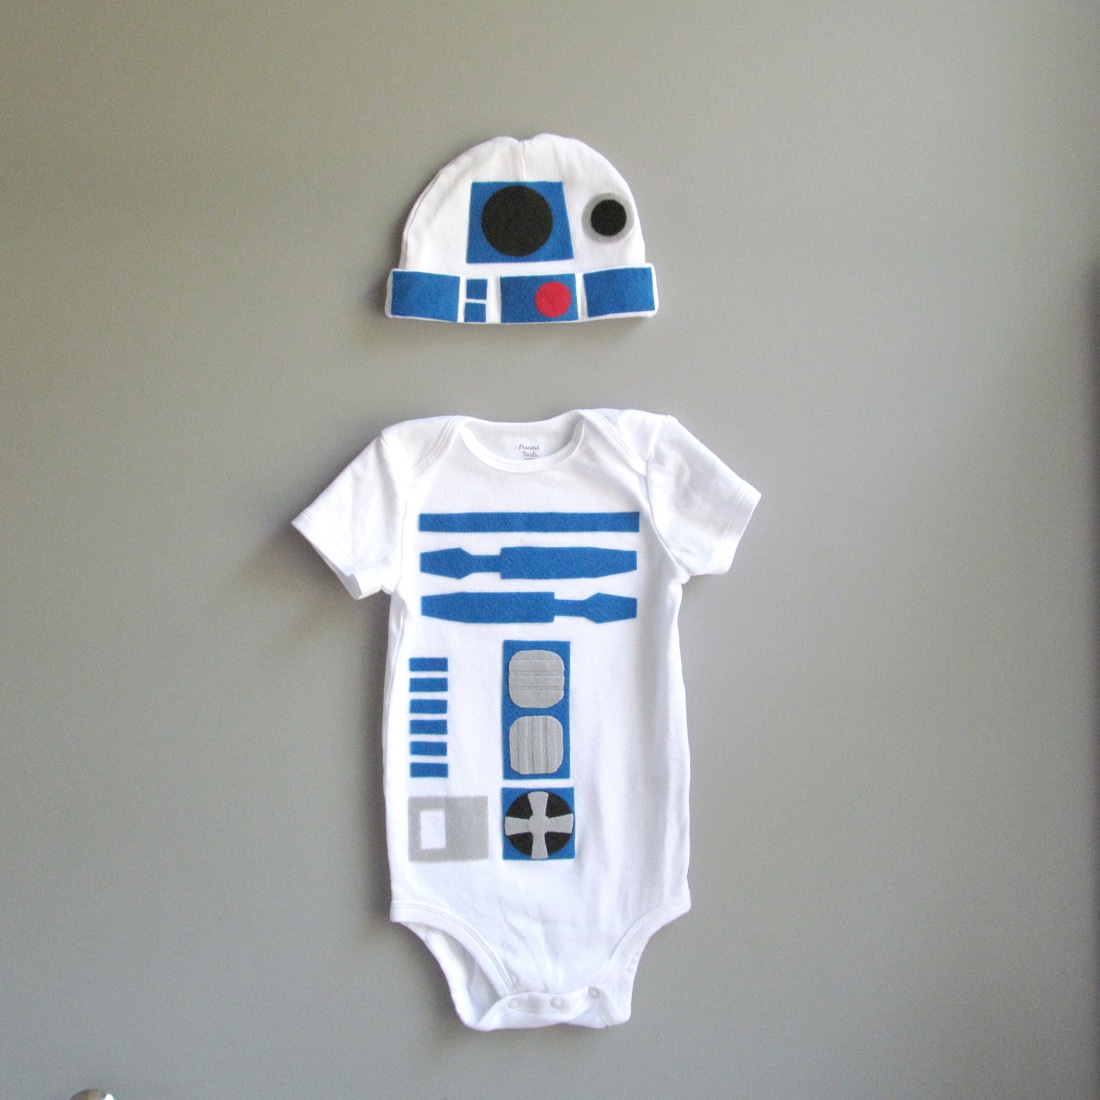 Editor Sta in plaats daarvan op motto R2-D2 Baby Costume: Definitely The Droid You're Looking For